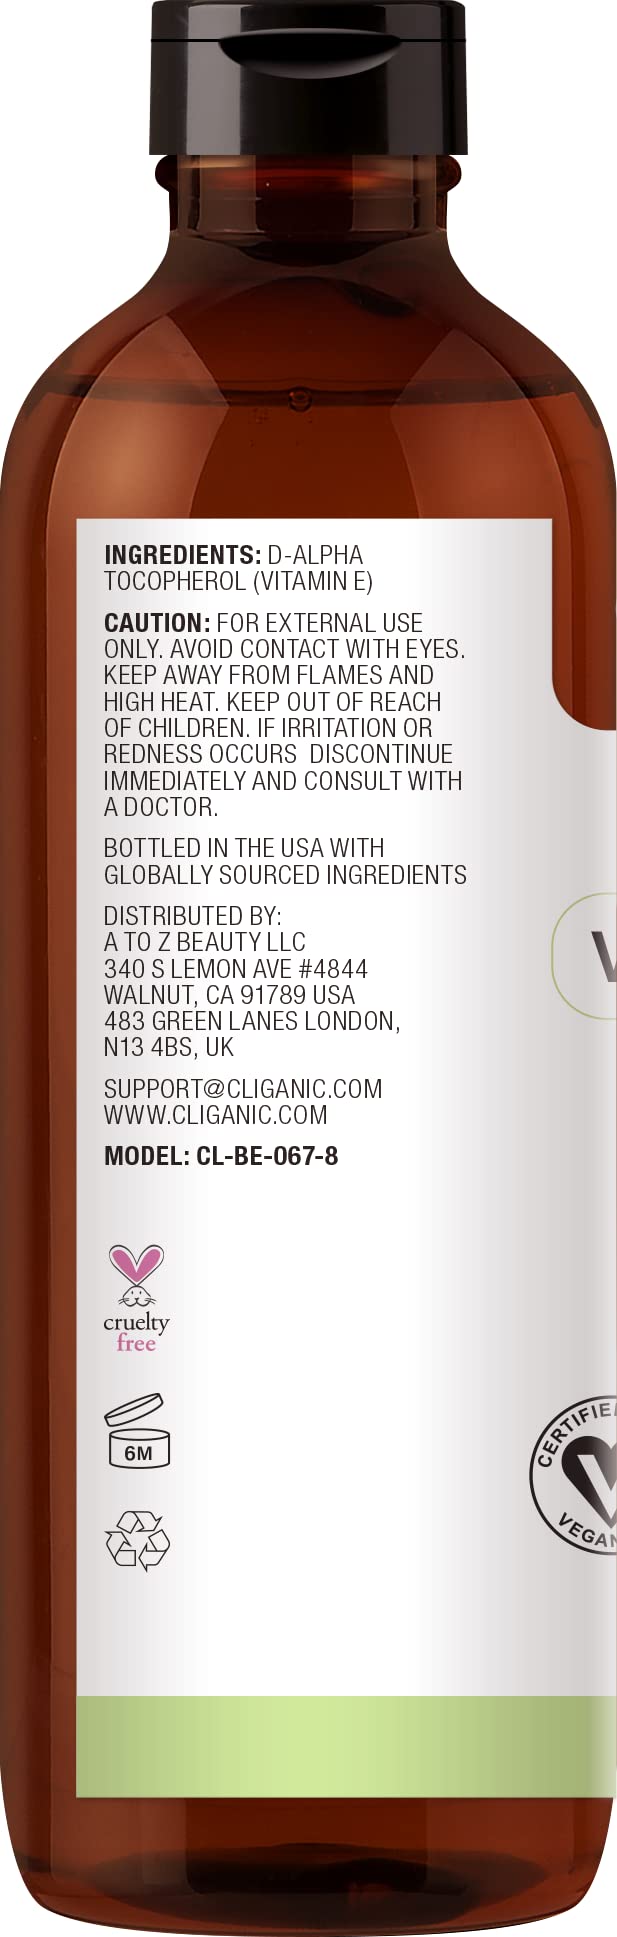 Cliganic 100% Pure Vitamin E Oil for Skin, Hair & Face 240,000 IU (8oz), Non-GMO Verified | Natural D-Alpha Tocopherol